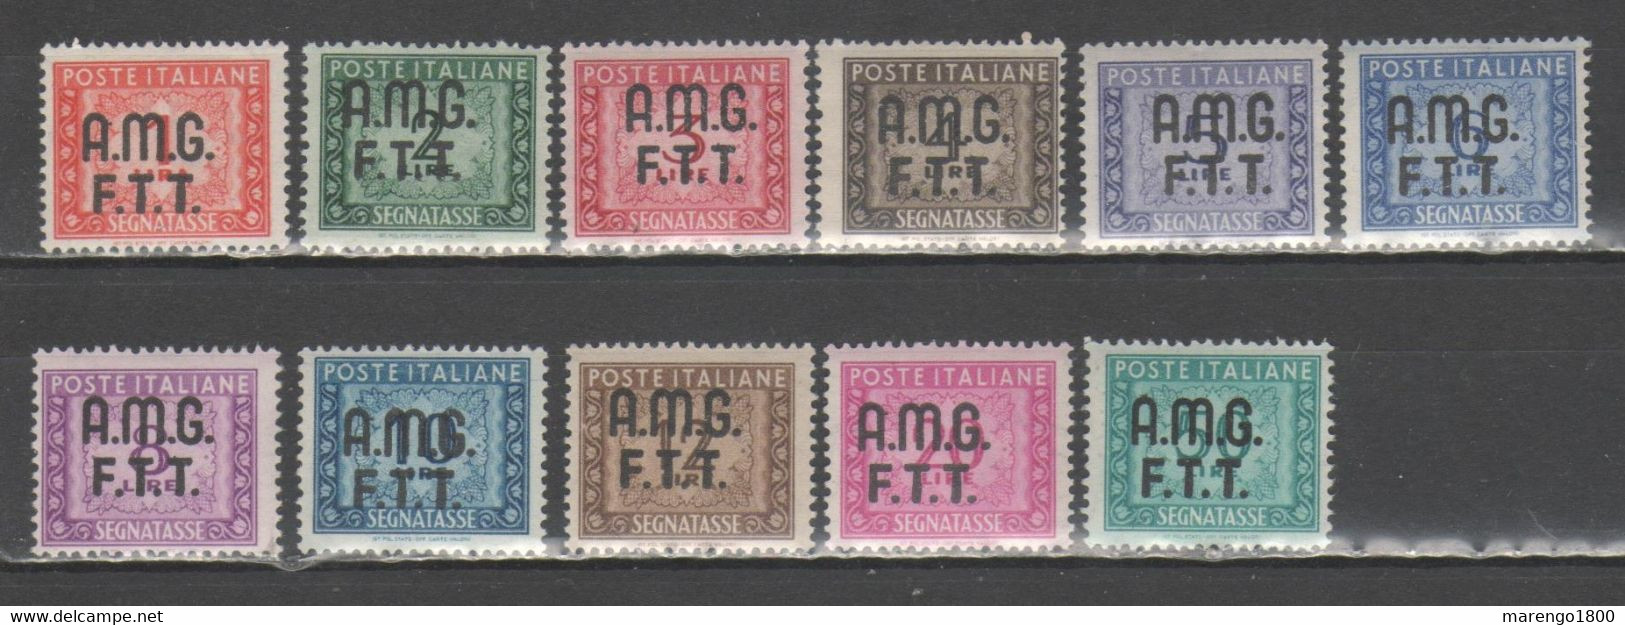 Amg-Ftt 1947-49 - Segnatasse **           (g8182) - Taxe